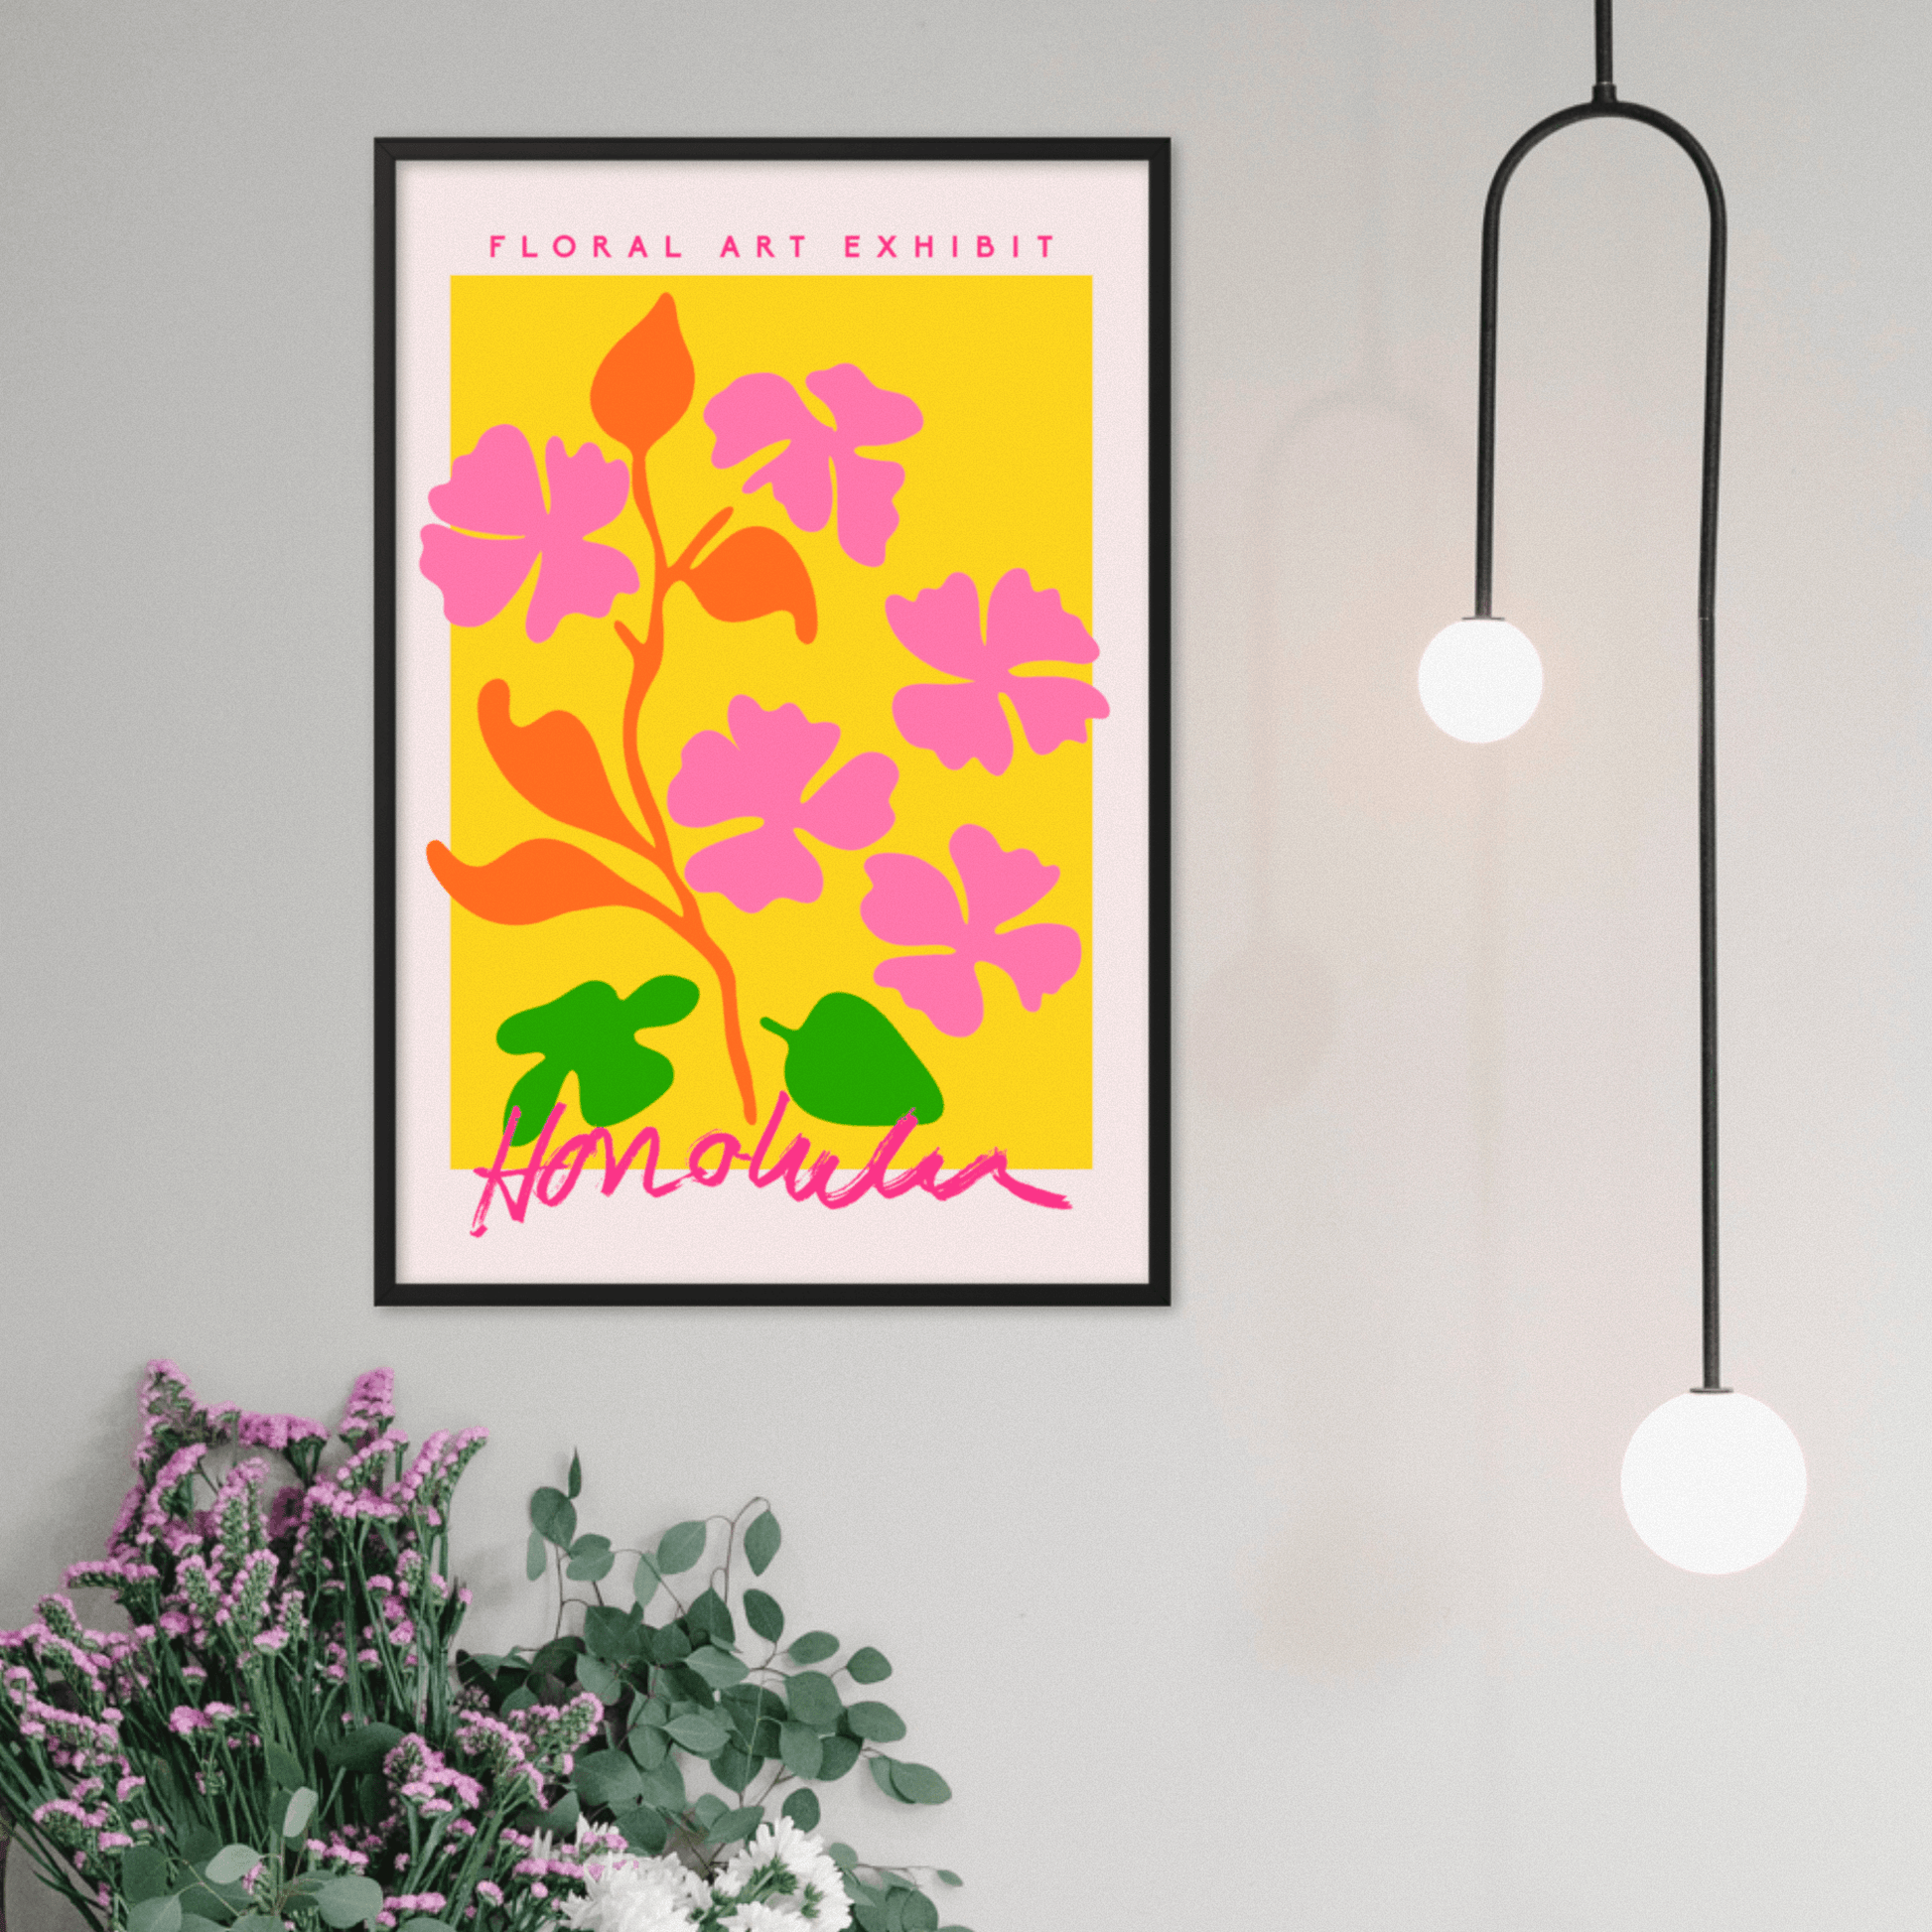 Honolulu Flower Exhibit, Poster - THE WALL SNOB